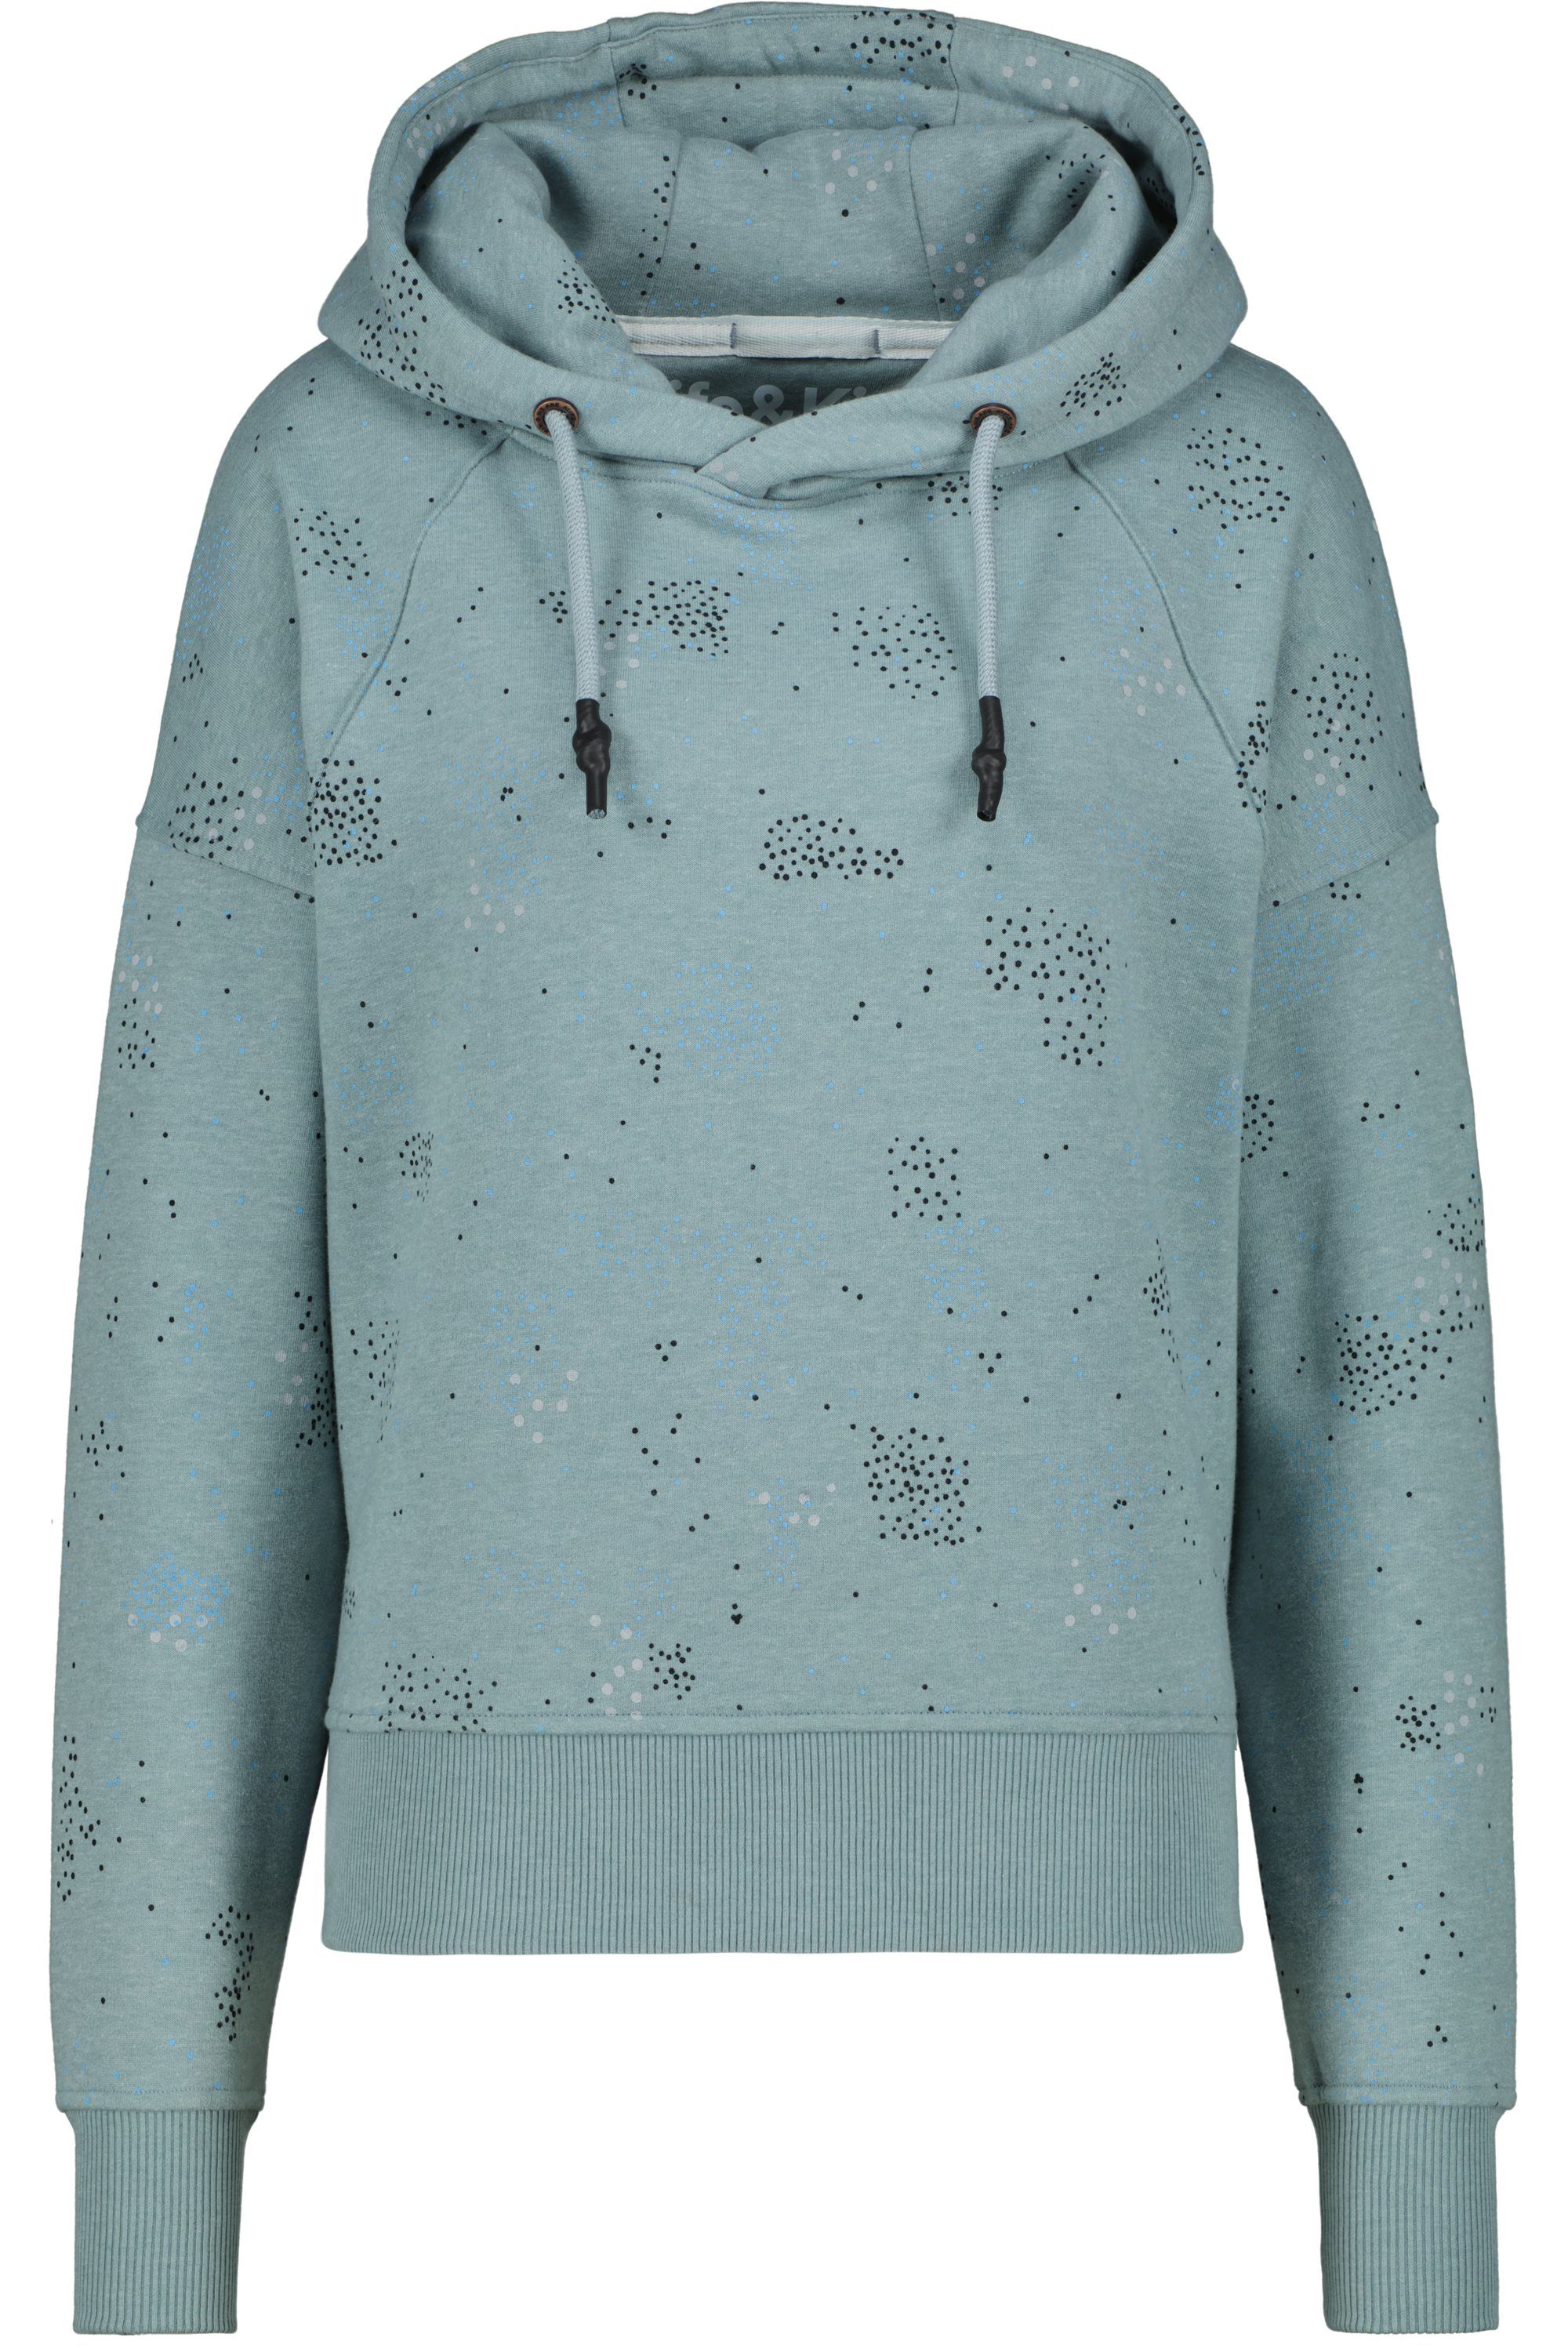 Sweat Damen & Kapuzensweatshirt, Sweatshirt pacific JessyAK B Alife Kapuzensweatshirt melange Kickin grey